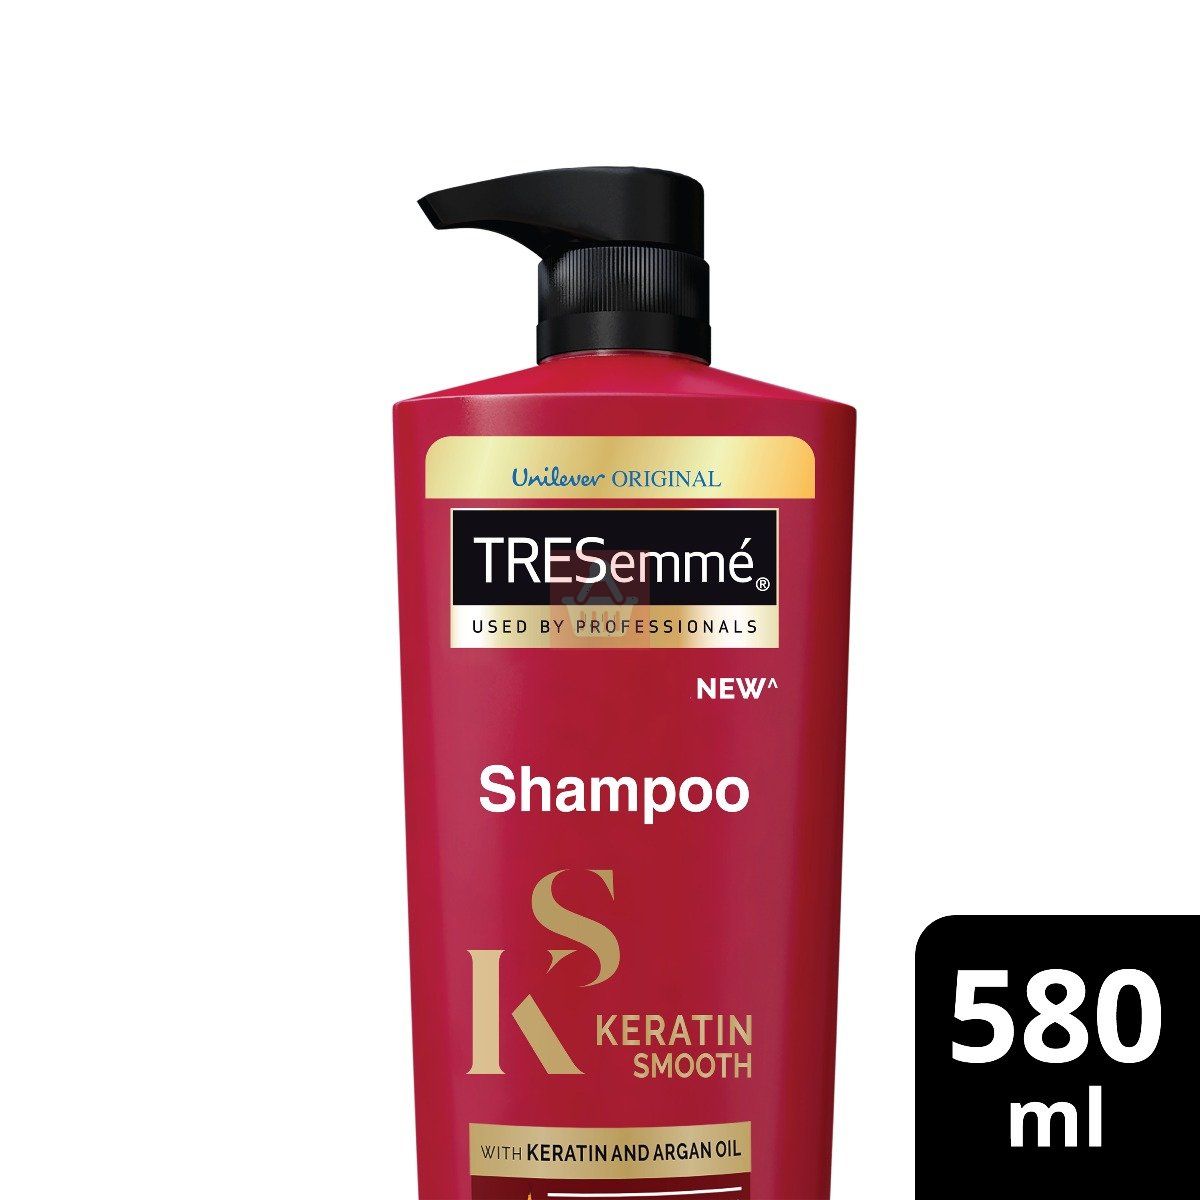 TRESemme Shampoo 580m